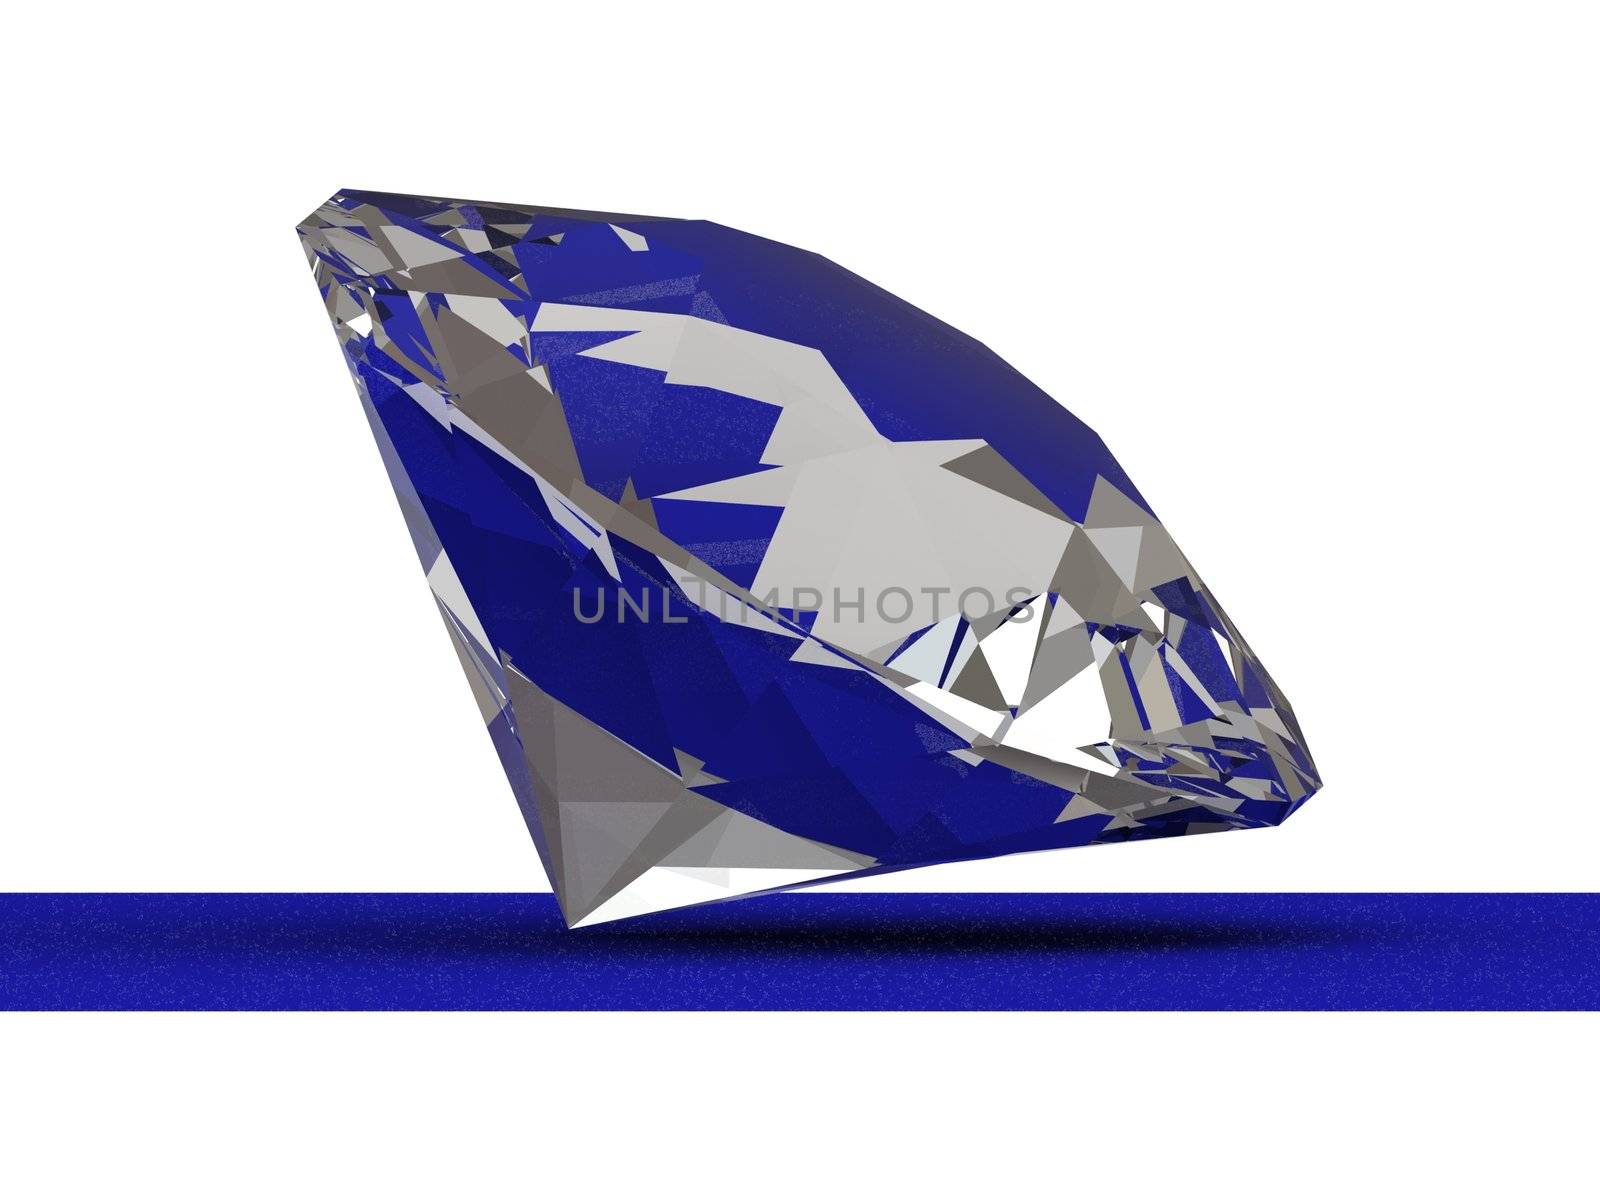 Transparent diamond on turn blue linen